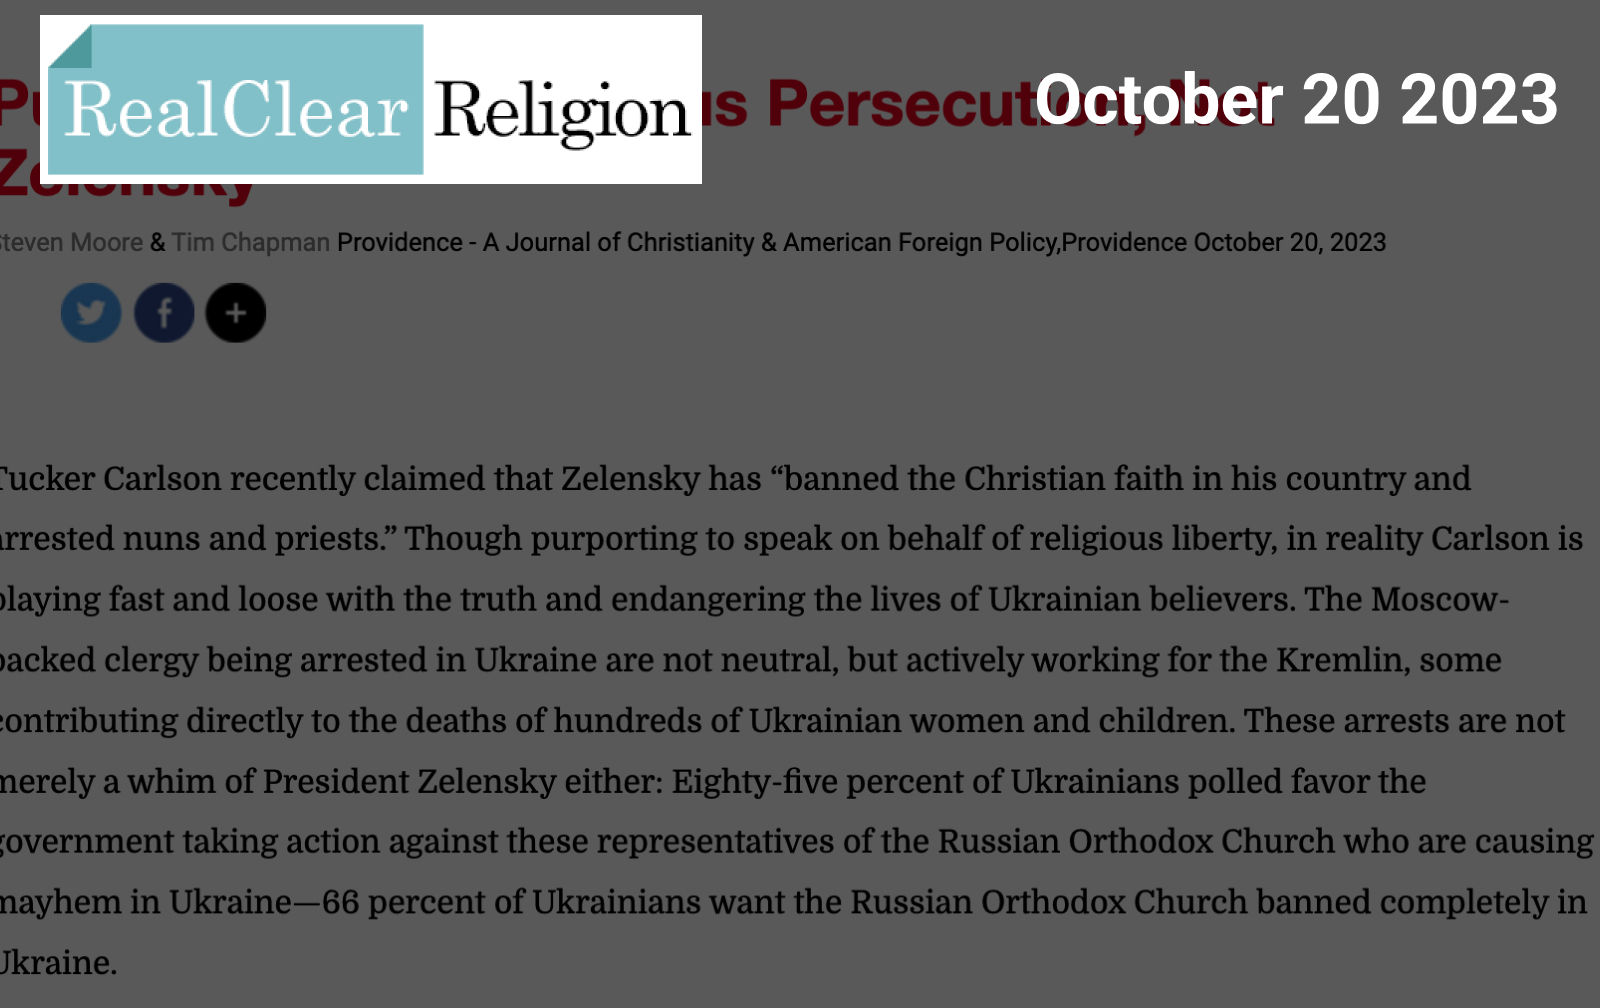 Putin practices religious persecution, NOT Zelensky